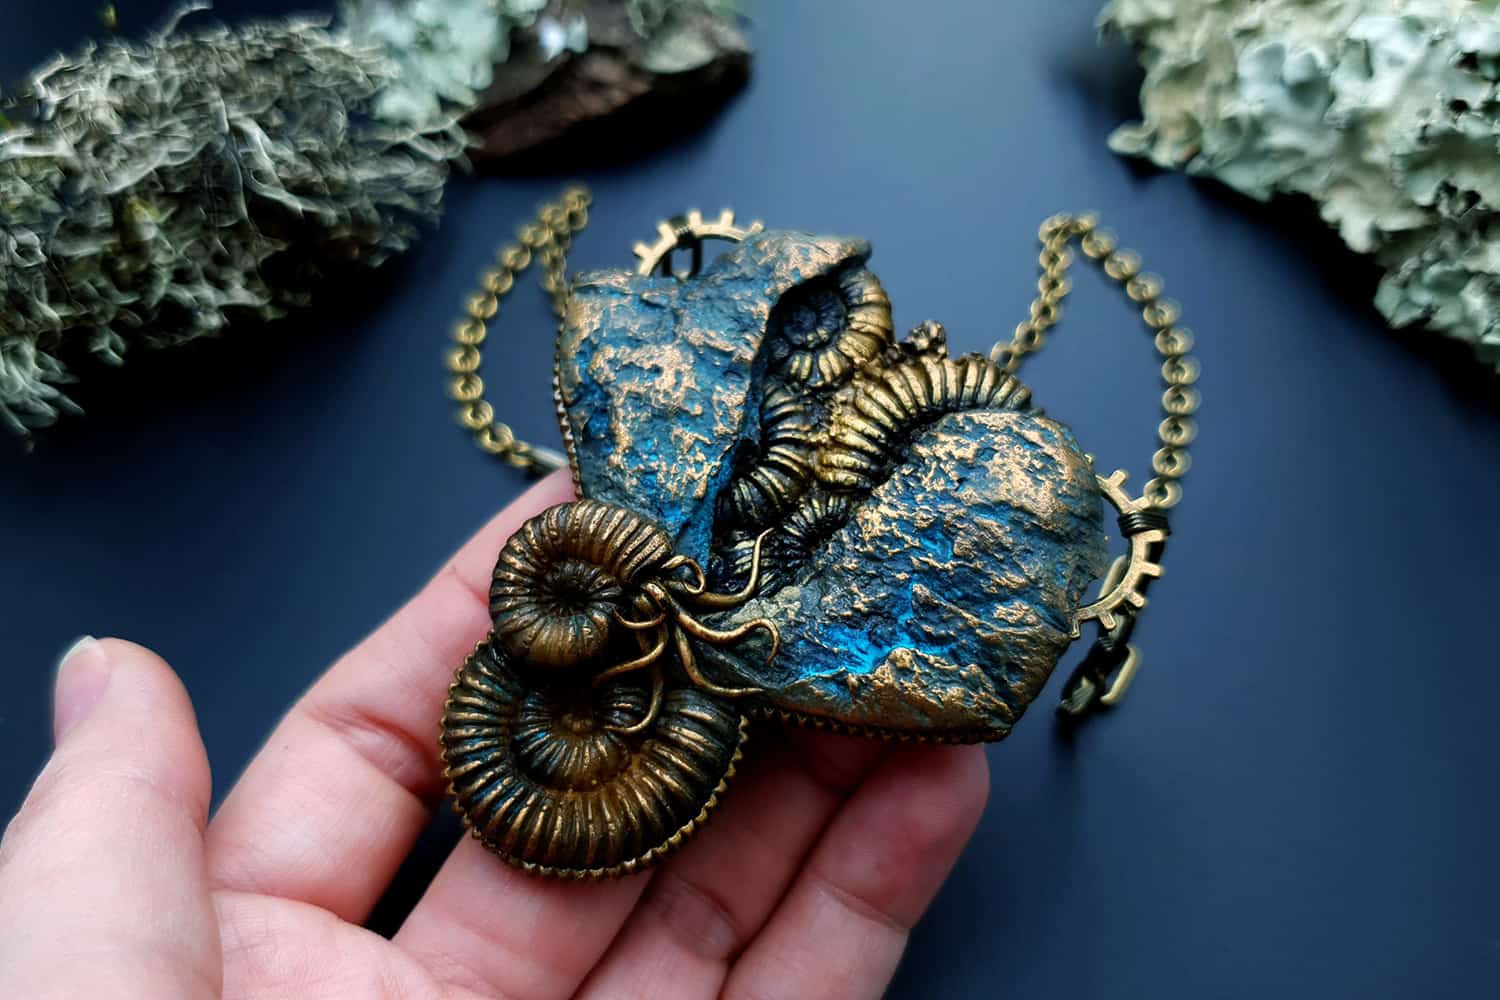 Large Ammonites Mold #2 (21911)